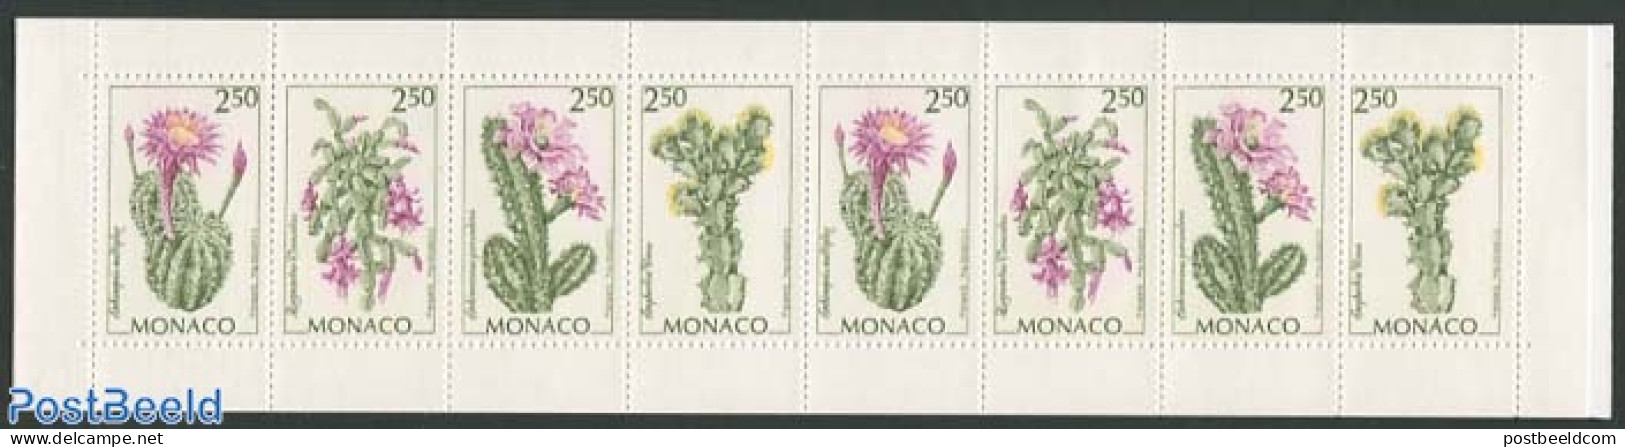 Monaco 1993 Cactus Flowers Booklet, Mint NH, Nature - Cacti - Flowers & Plants - Stamp Booklets - Ongebruikt